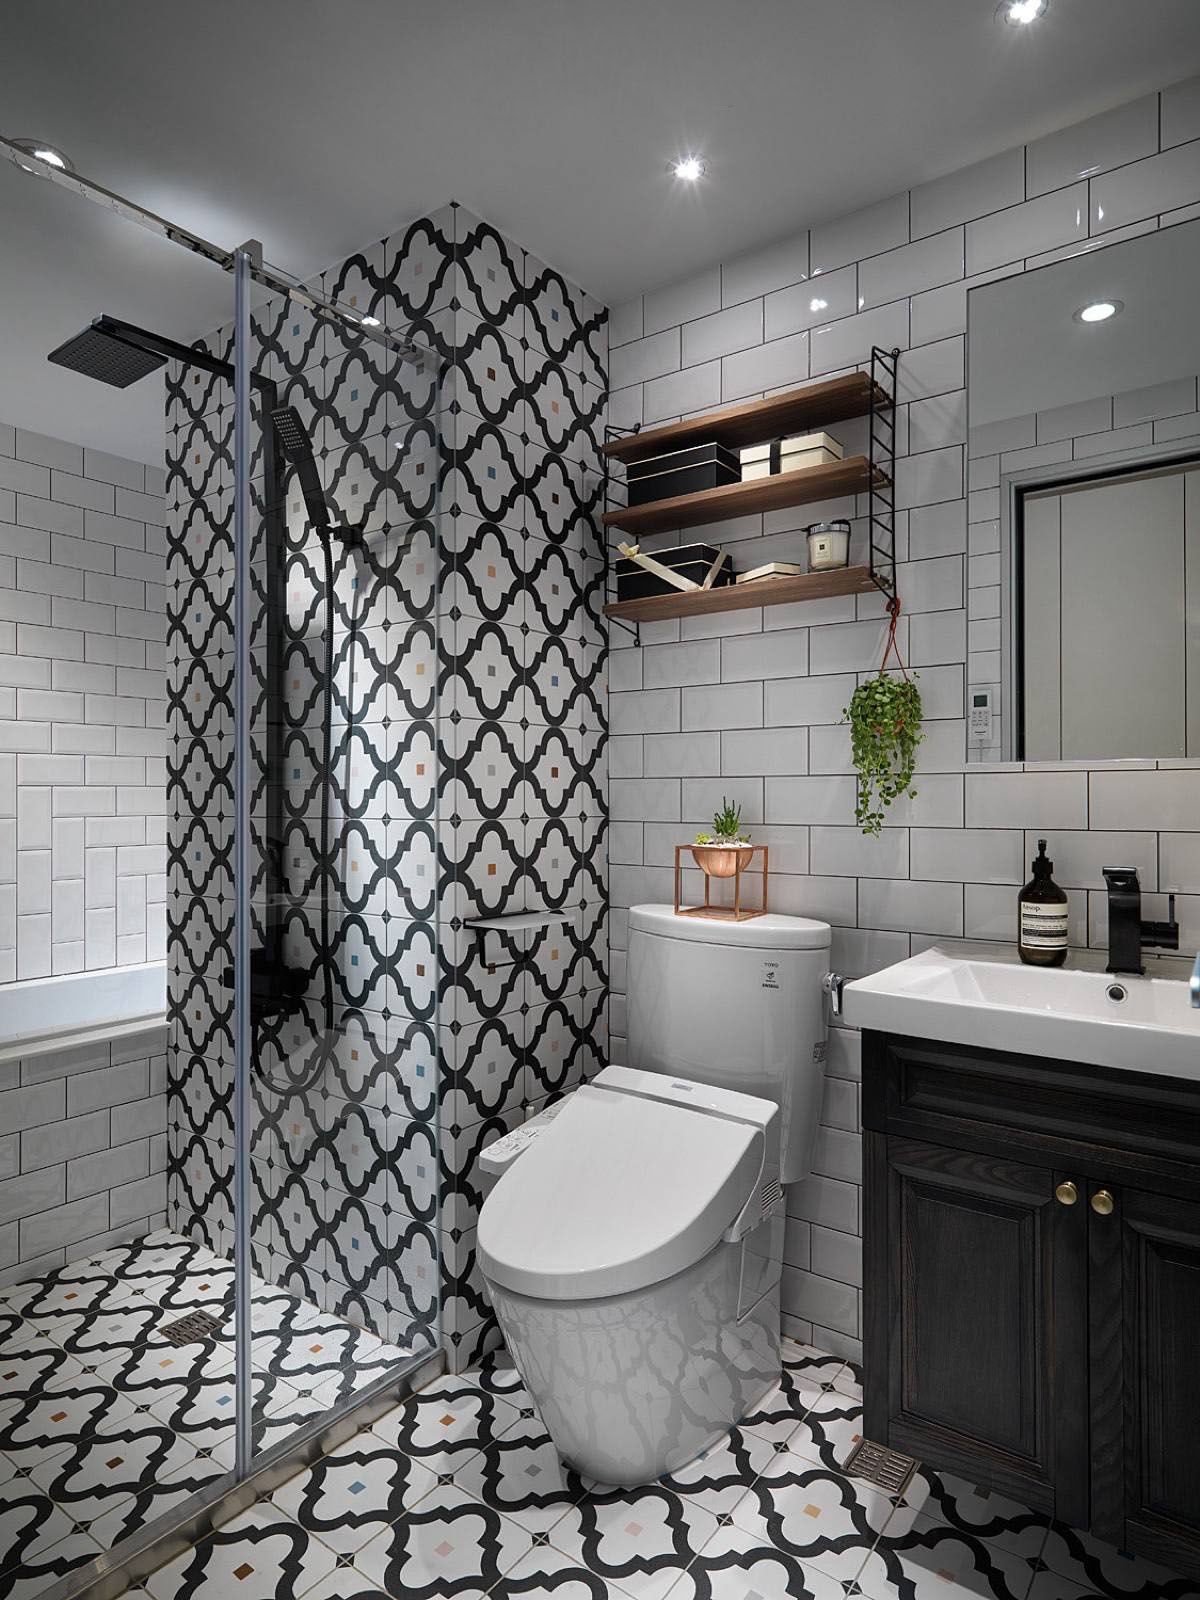 Patterned Bathroom Tiles In Scandinavian Style Bathroom 